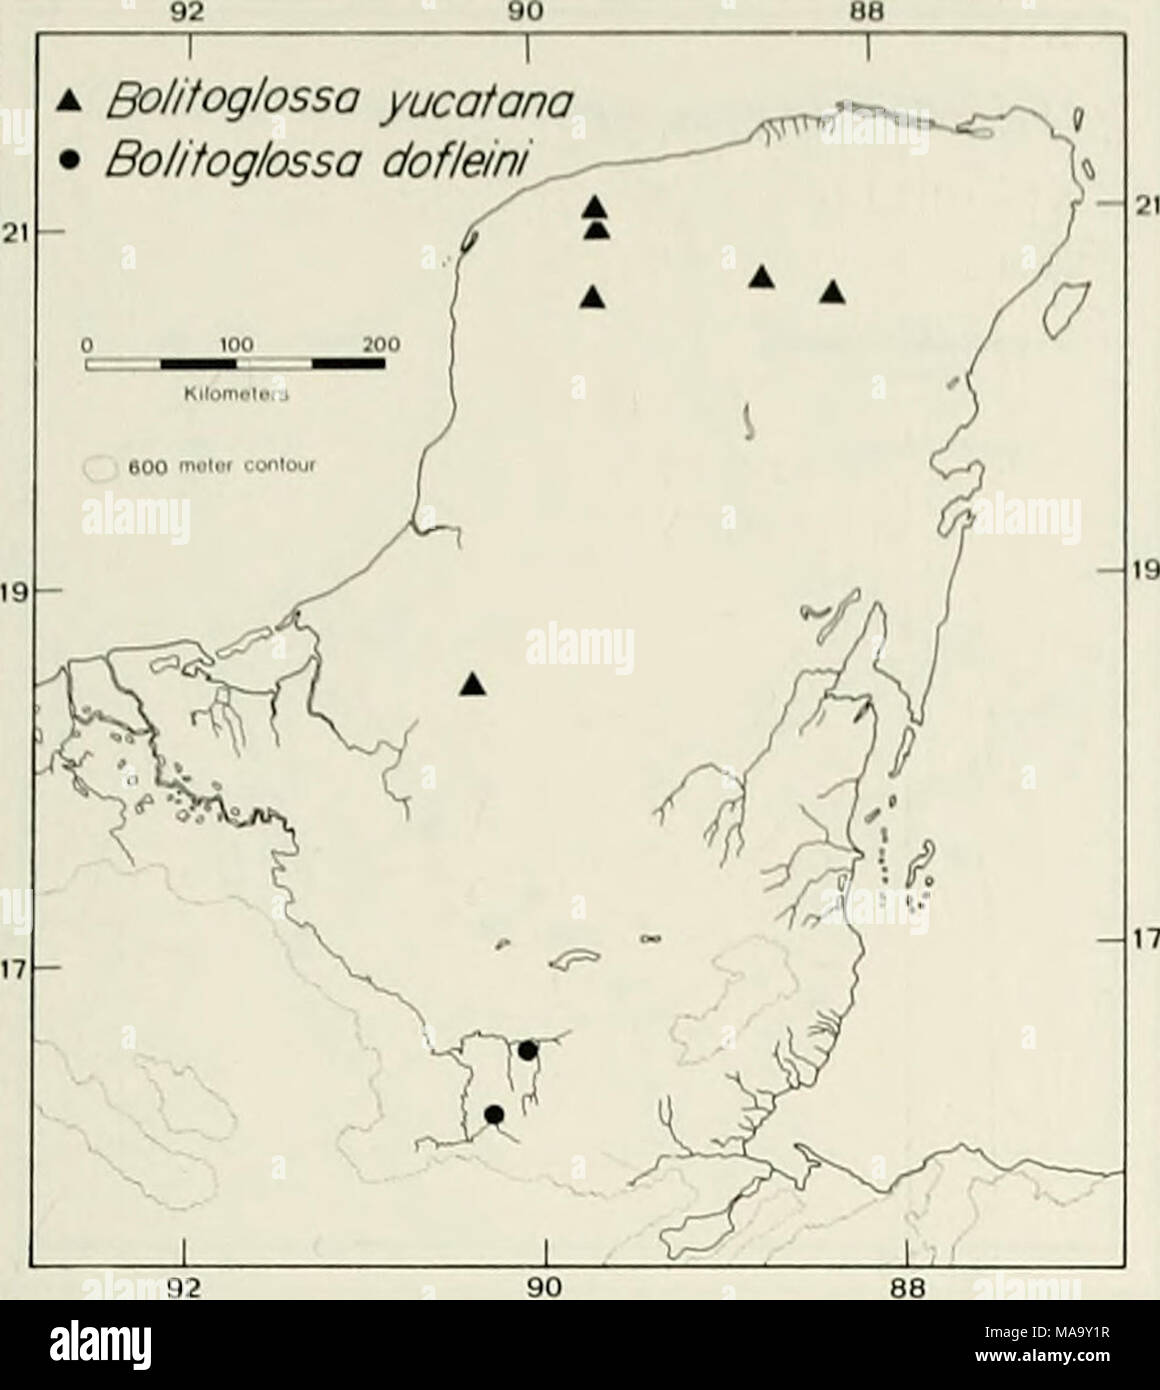 . An ecogeographic analysis of the herpetofauna of the Yucatan Peninsula . Bolitoglossa 1 rufescens 1 T ' Tzl- )  } /. - ^^ / P J - J^V Y / 7^ / ^^^ Â«?kÂ«s S / ^ ^' â â¢ ^ '&gt;'^ U â¢ c^ : â¢.â¢â¢ ^.^   1 1 Rhinophrynus dorsalis 1 --x*   /^ â¢ V Â° â¢*Â» '( /o j â¢  f y^ â¢ /   -f^^^^^'' ' ^ Ij ^zy**^Y ; j^'^WlSJtts 1 -( ' S * ^=W&quot; ;^ 1 â^  Stock Photo